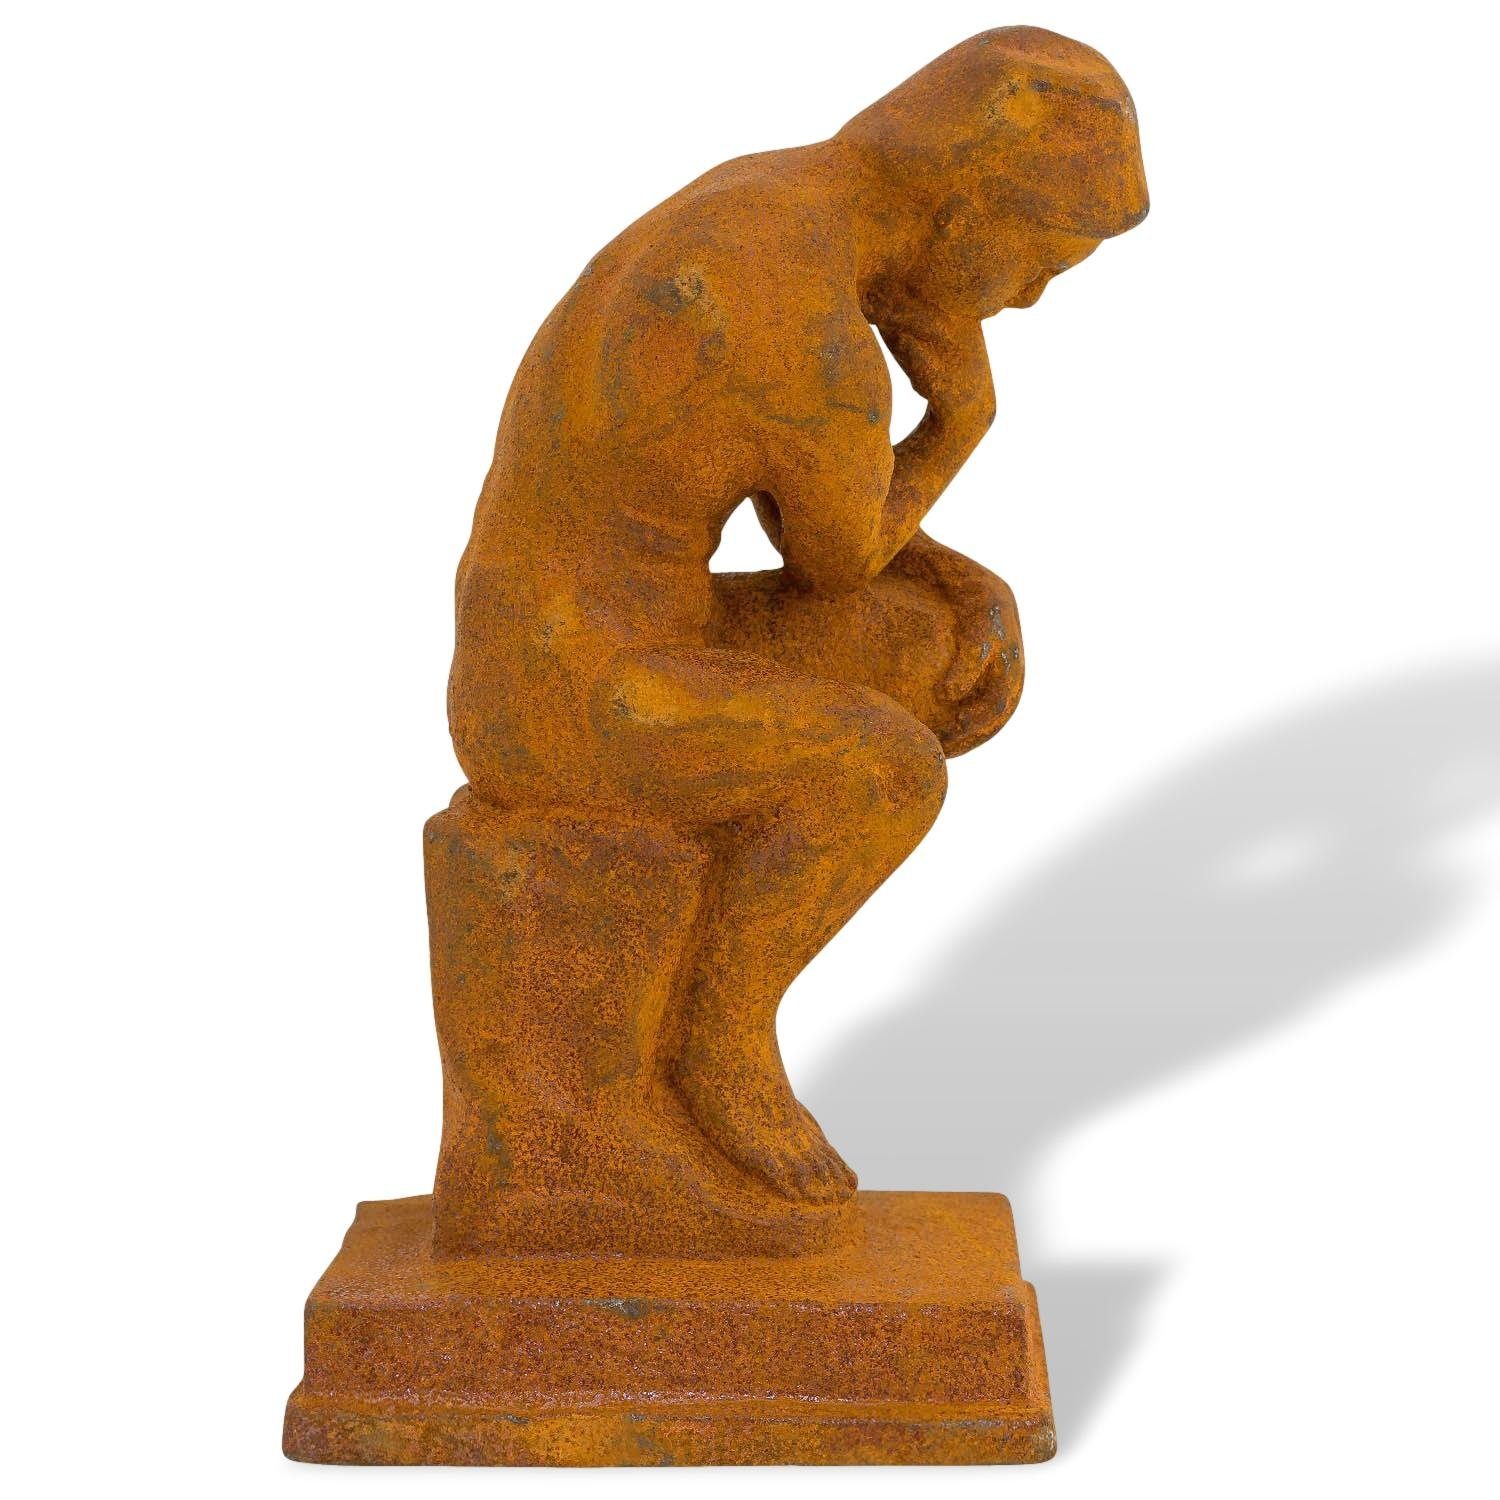 Aubaho Gartenfigur Skulptur Denker nach Rodin Eisen Figur Statue Garten Antik-Stil Replik